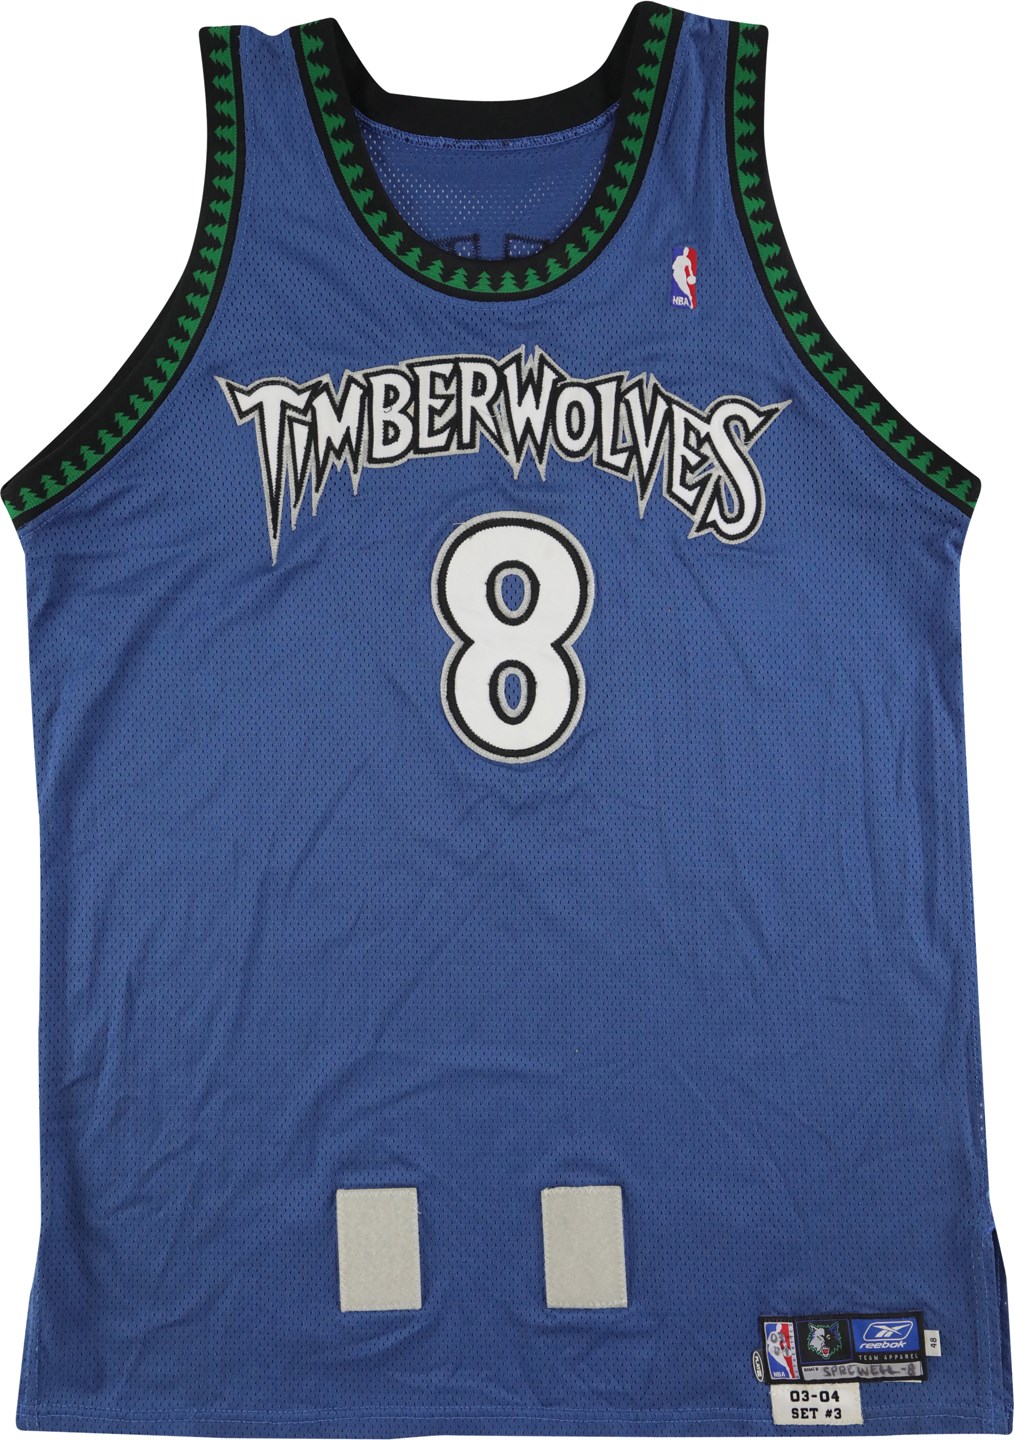 - 2003-04 Latrell Sprewell Minnesota Timberwolves Game Worn Jersey